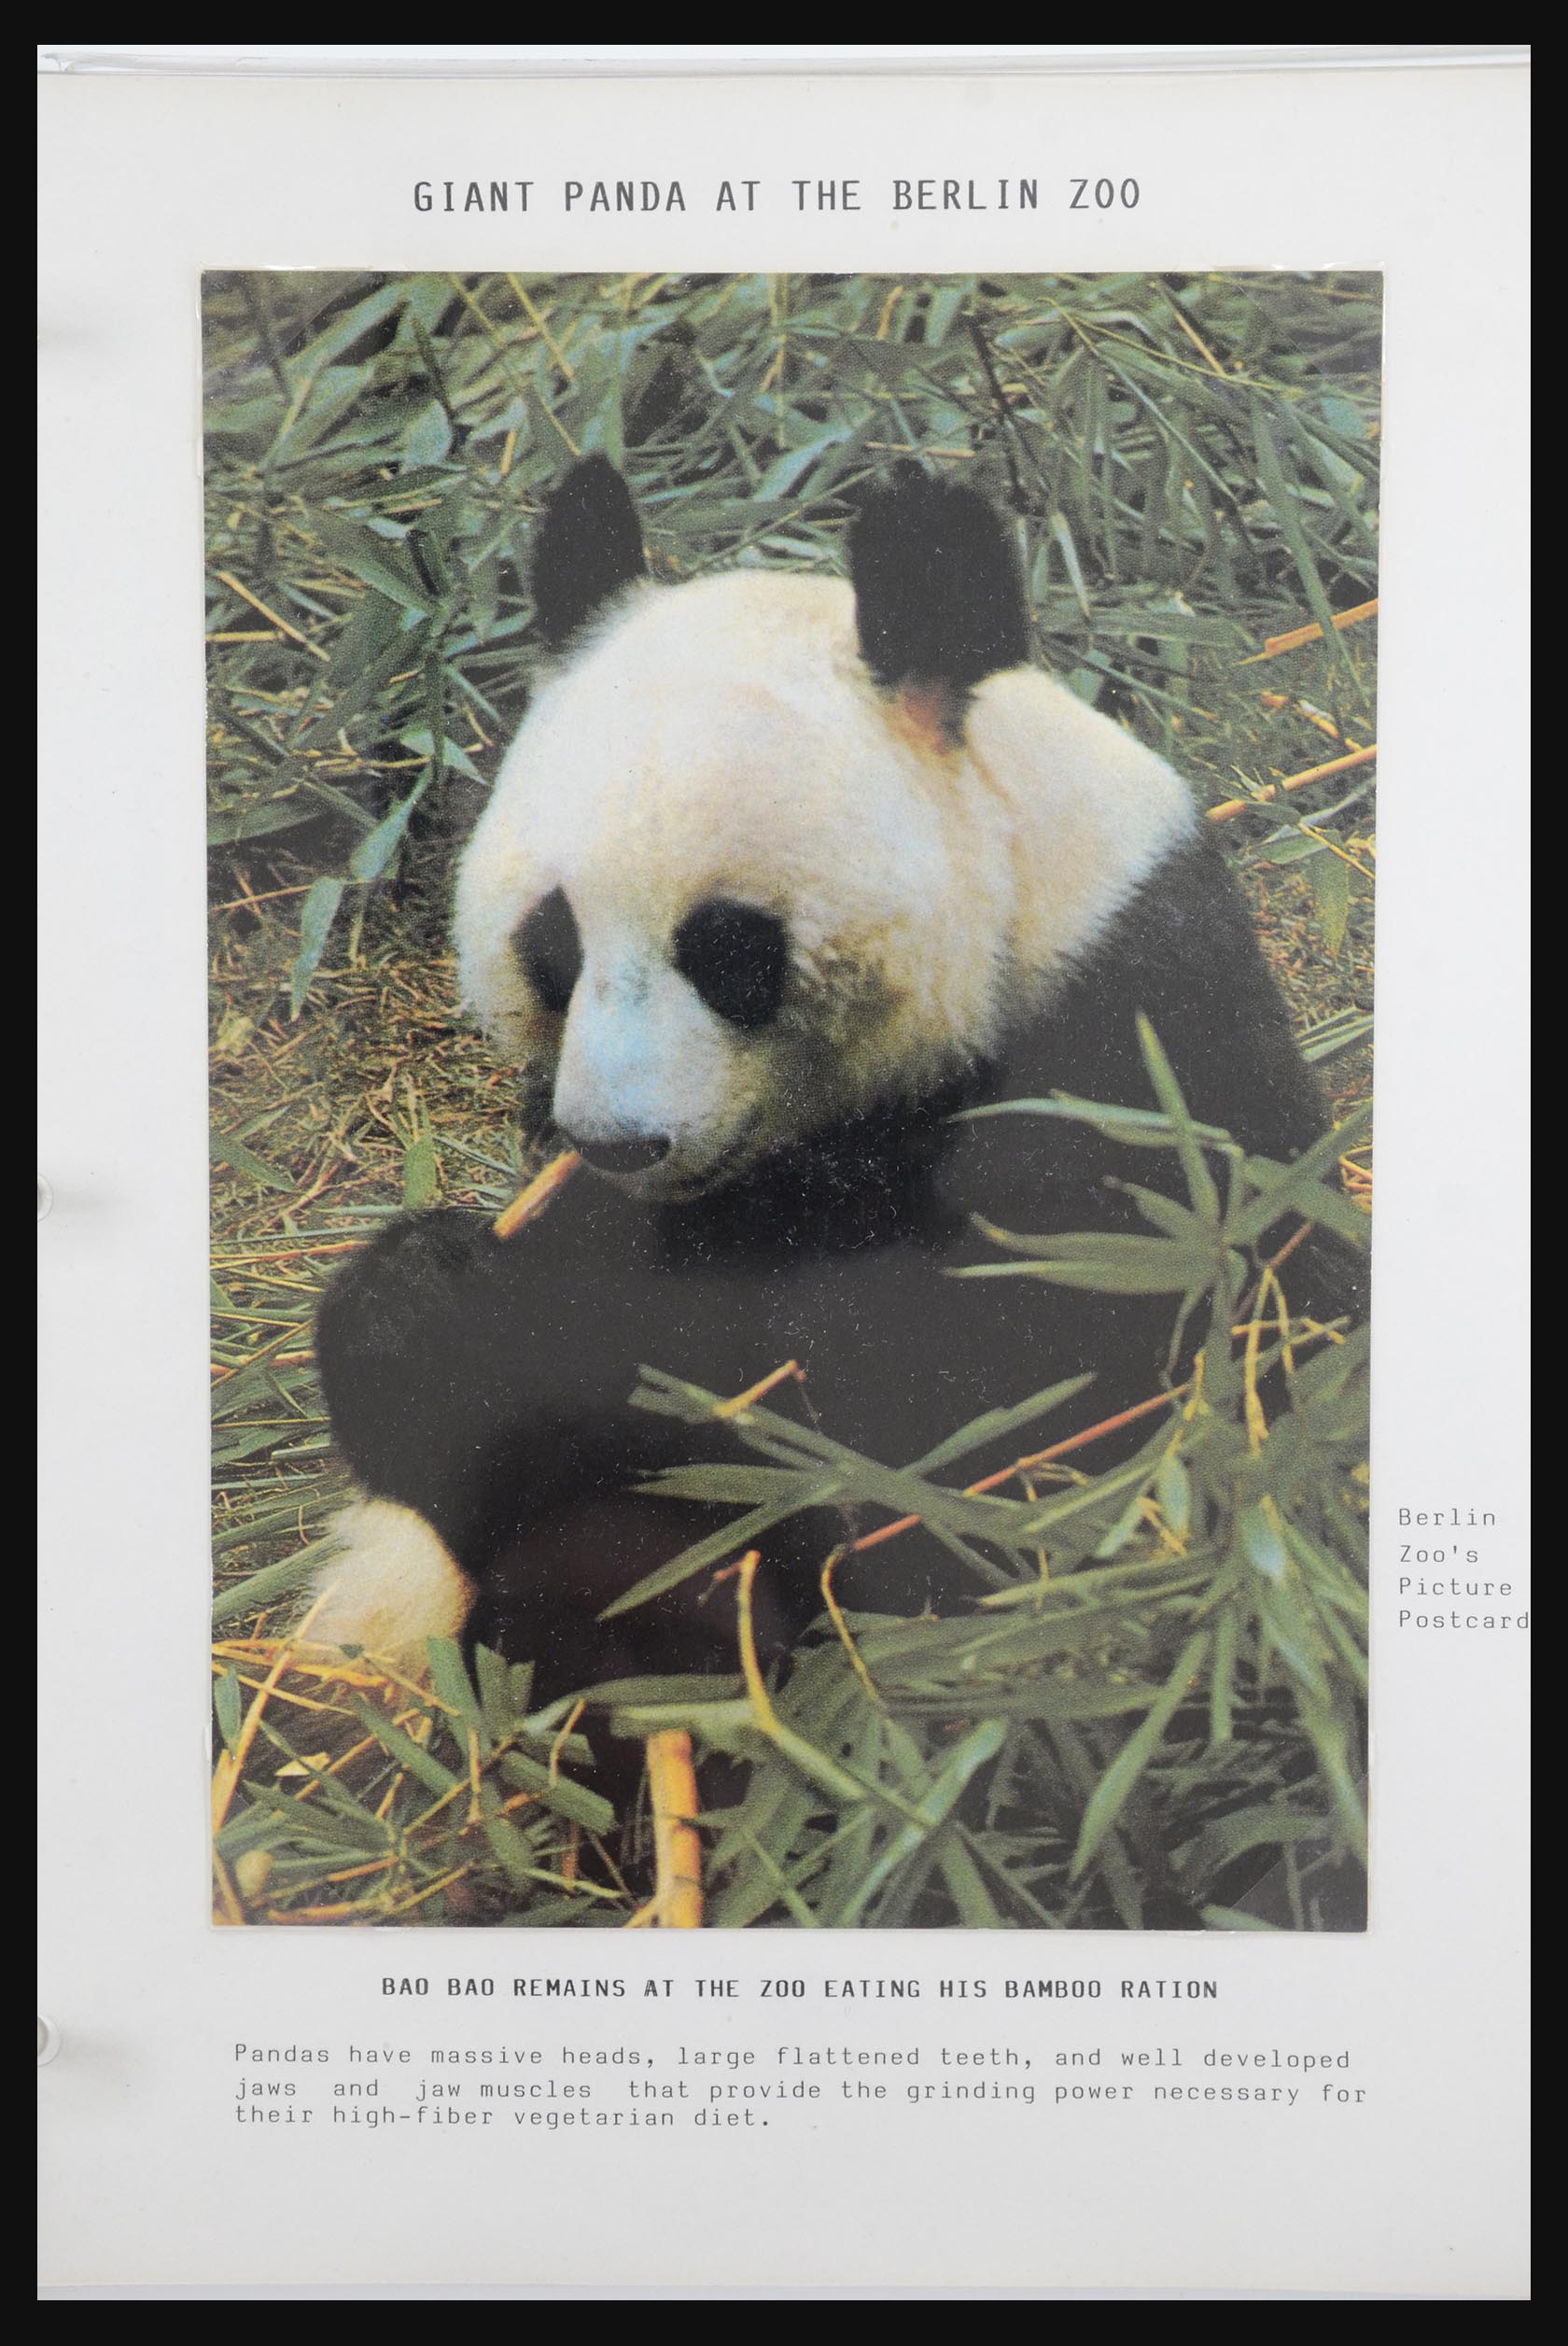 31922 033 - 31922 Thematic giant panda's 1937-1989.